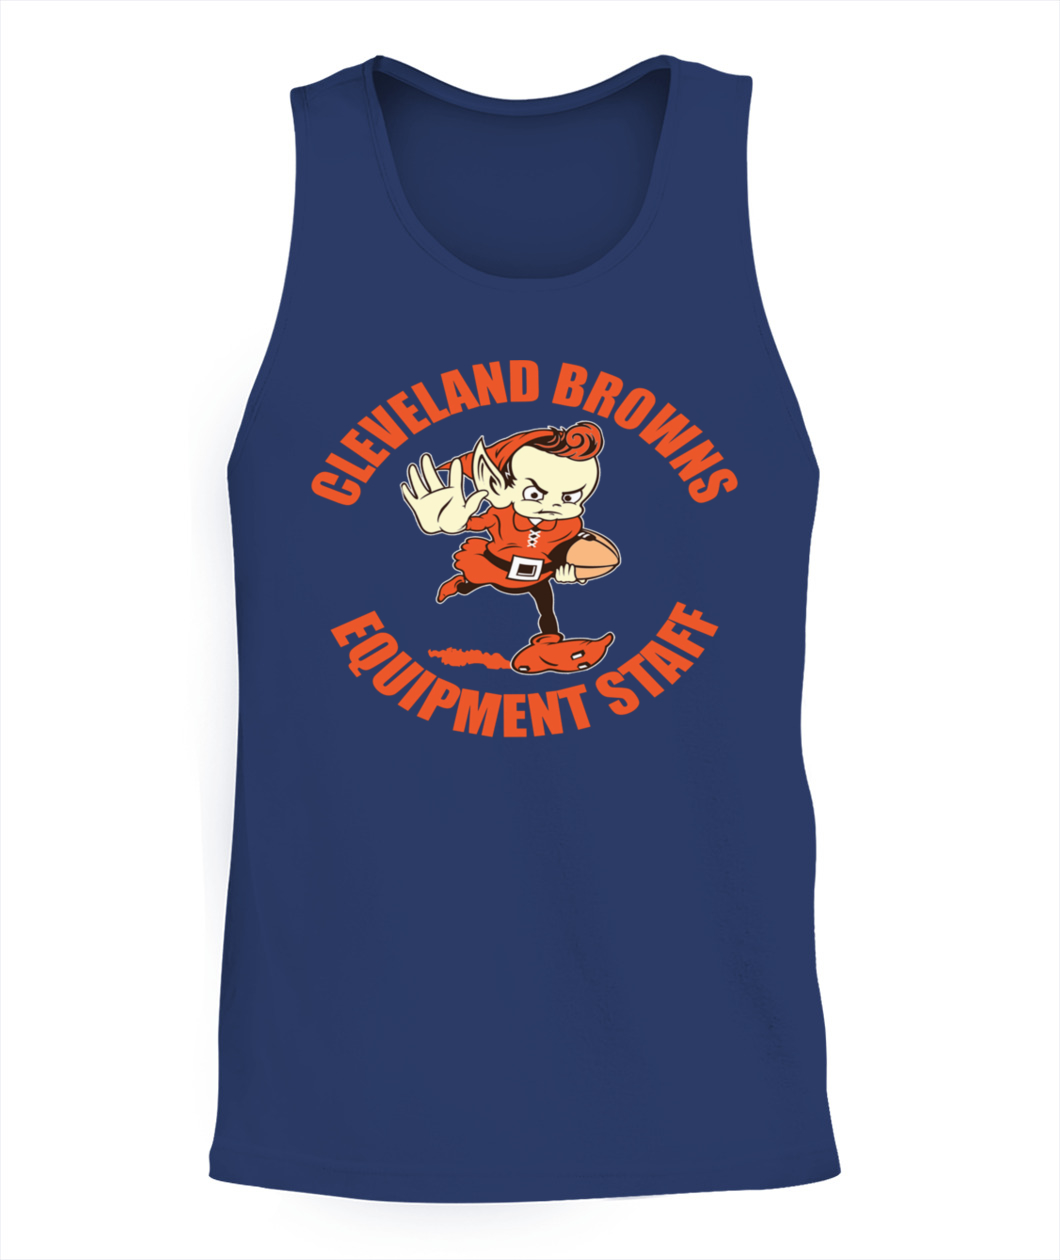 Holeshirts Funny Cleveland Browns Equipment Staff Shirt